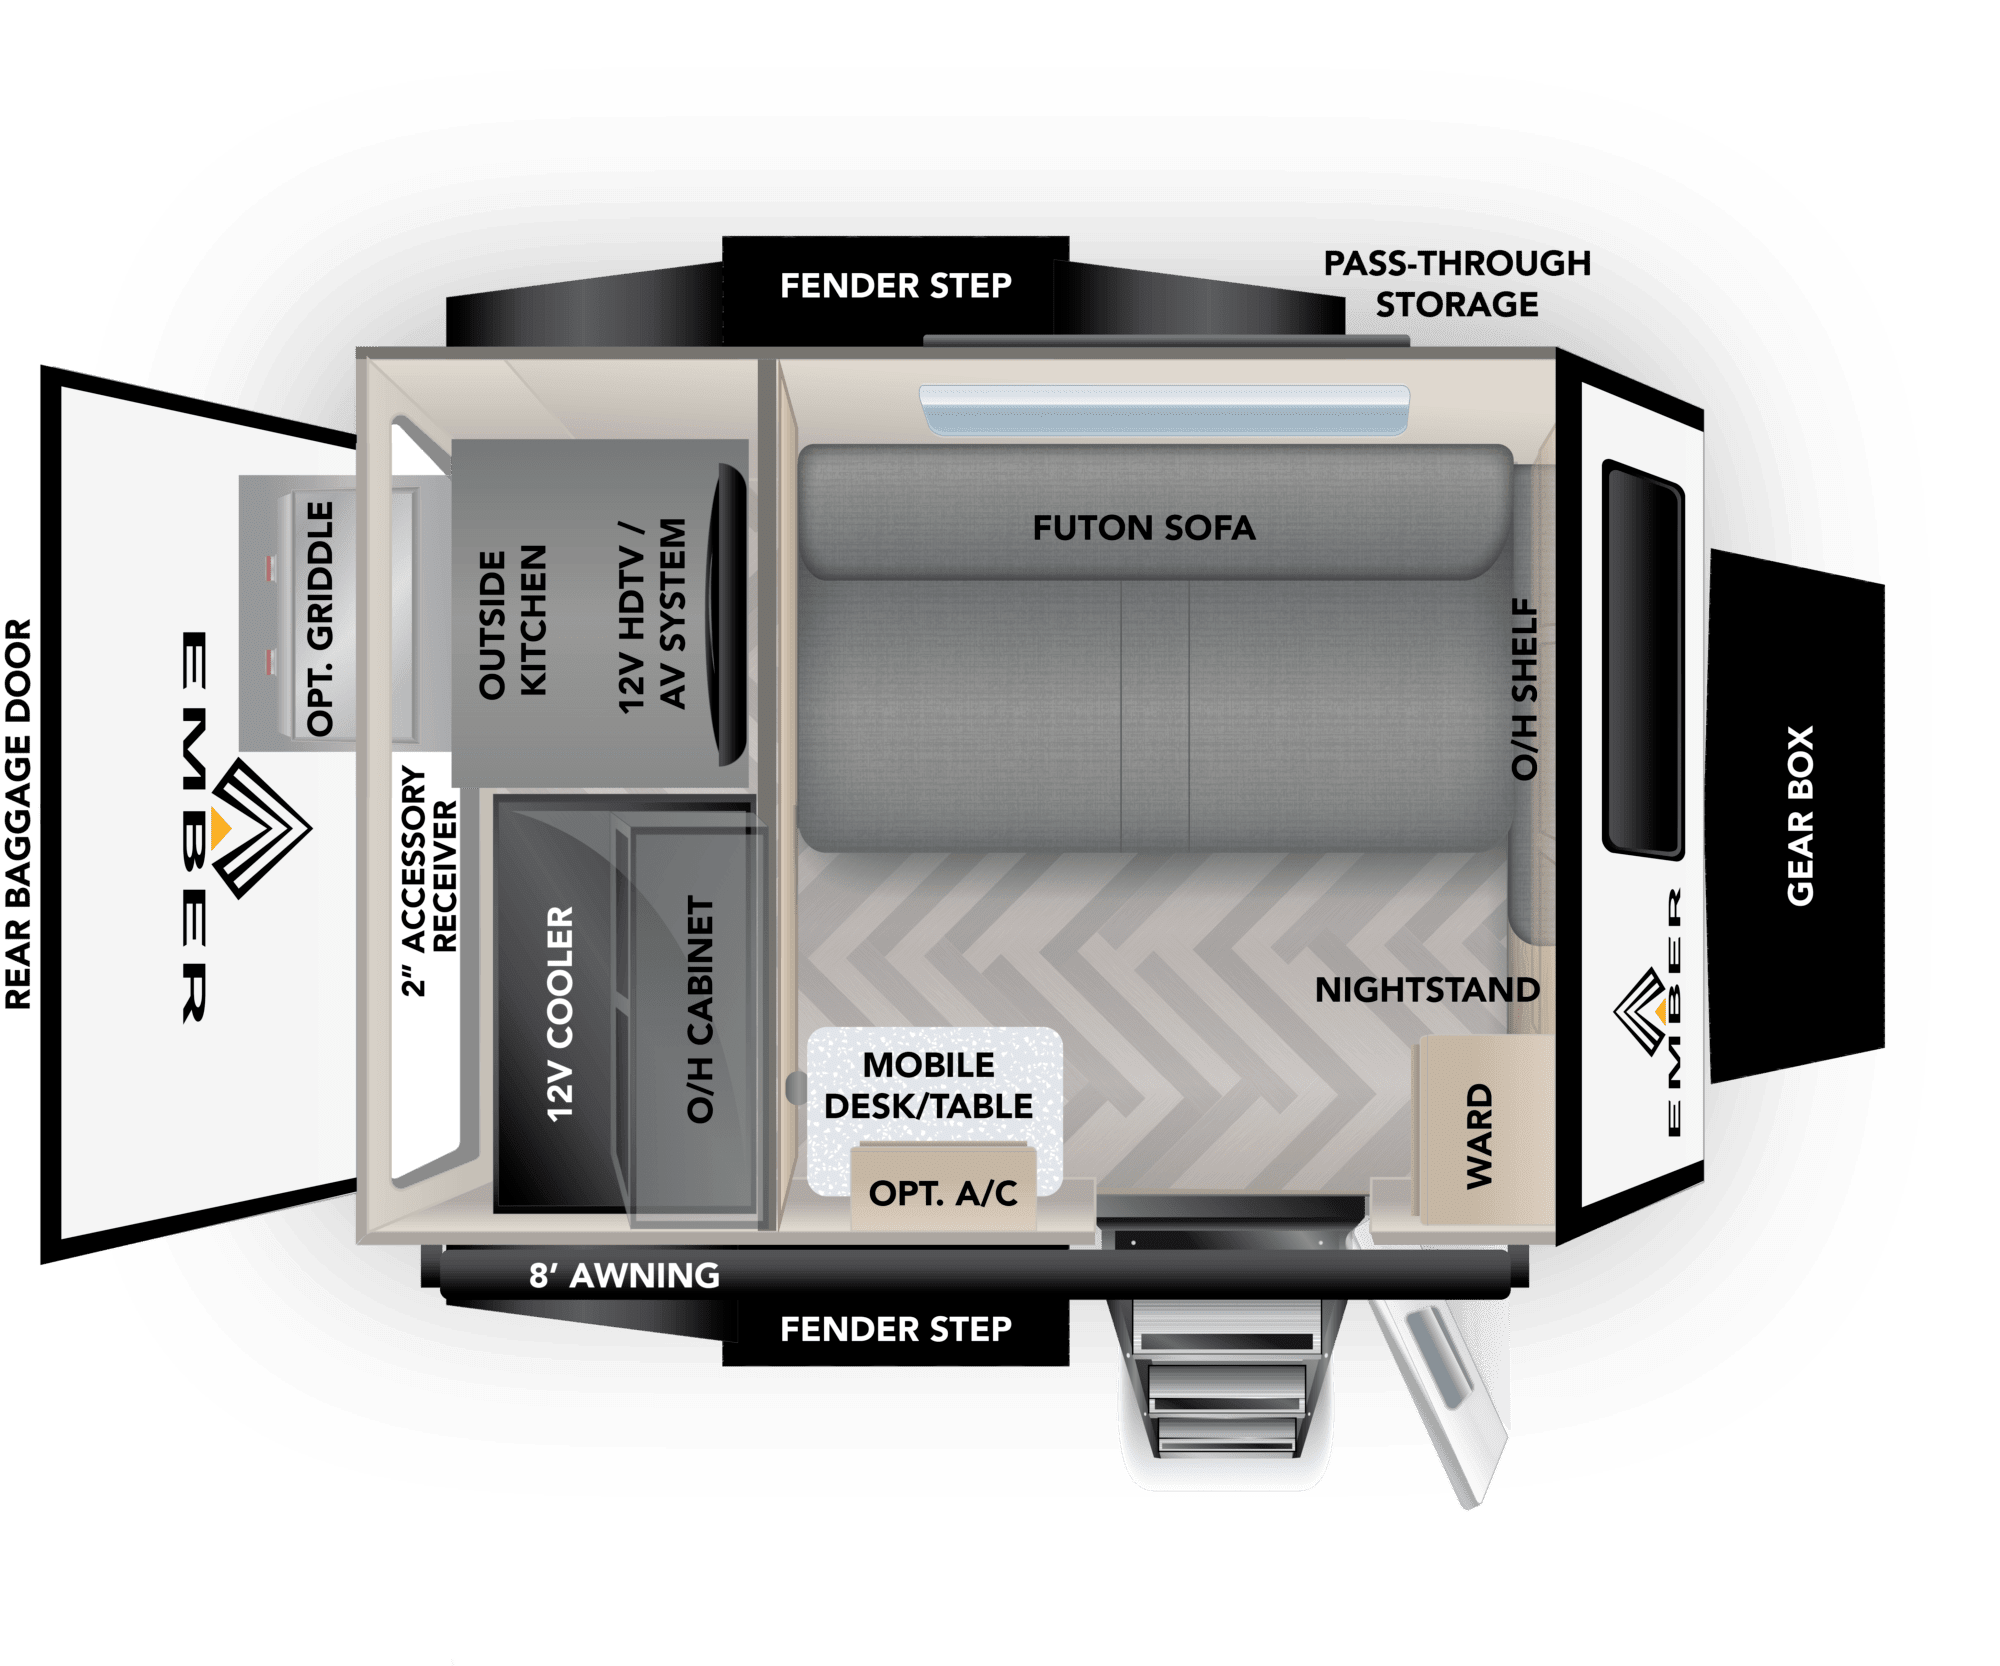 Ember RV Overland Micro Series ROK Travel Trailer Floorplan